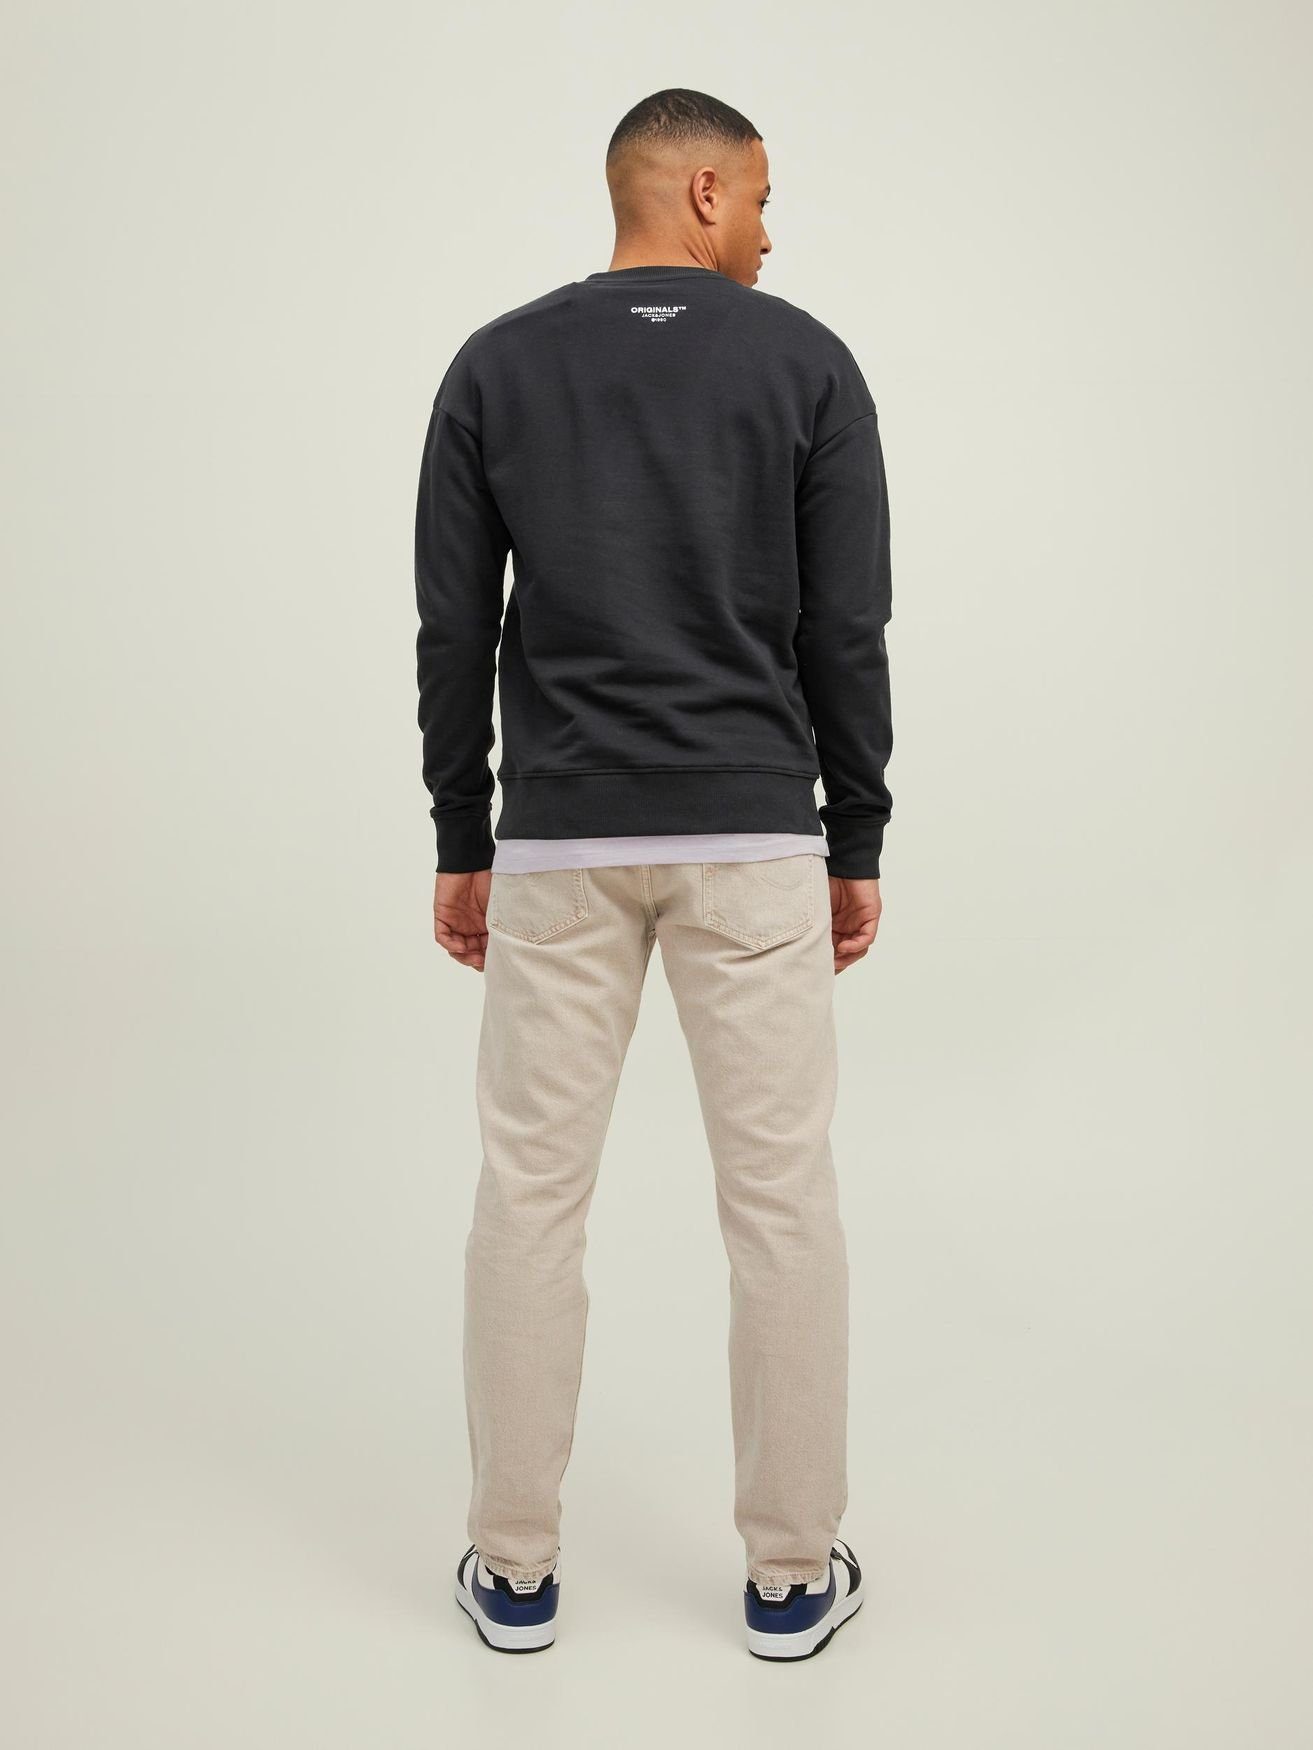 Jack & Jones Pullover Sweatshirt 4672 Sweater Langarm Basic Rundhals JORCLEAN in Schwarz-2 Shirt